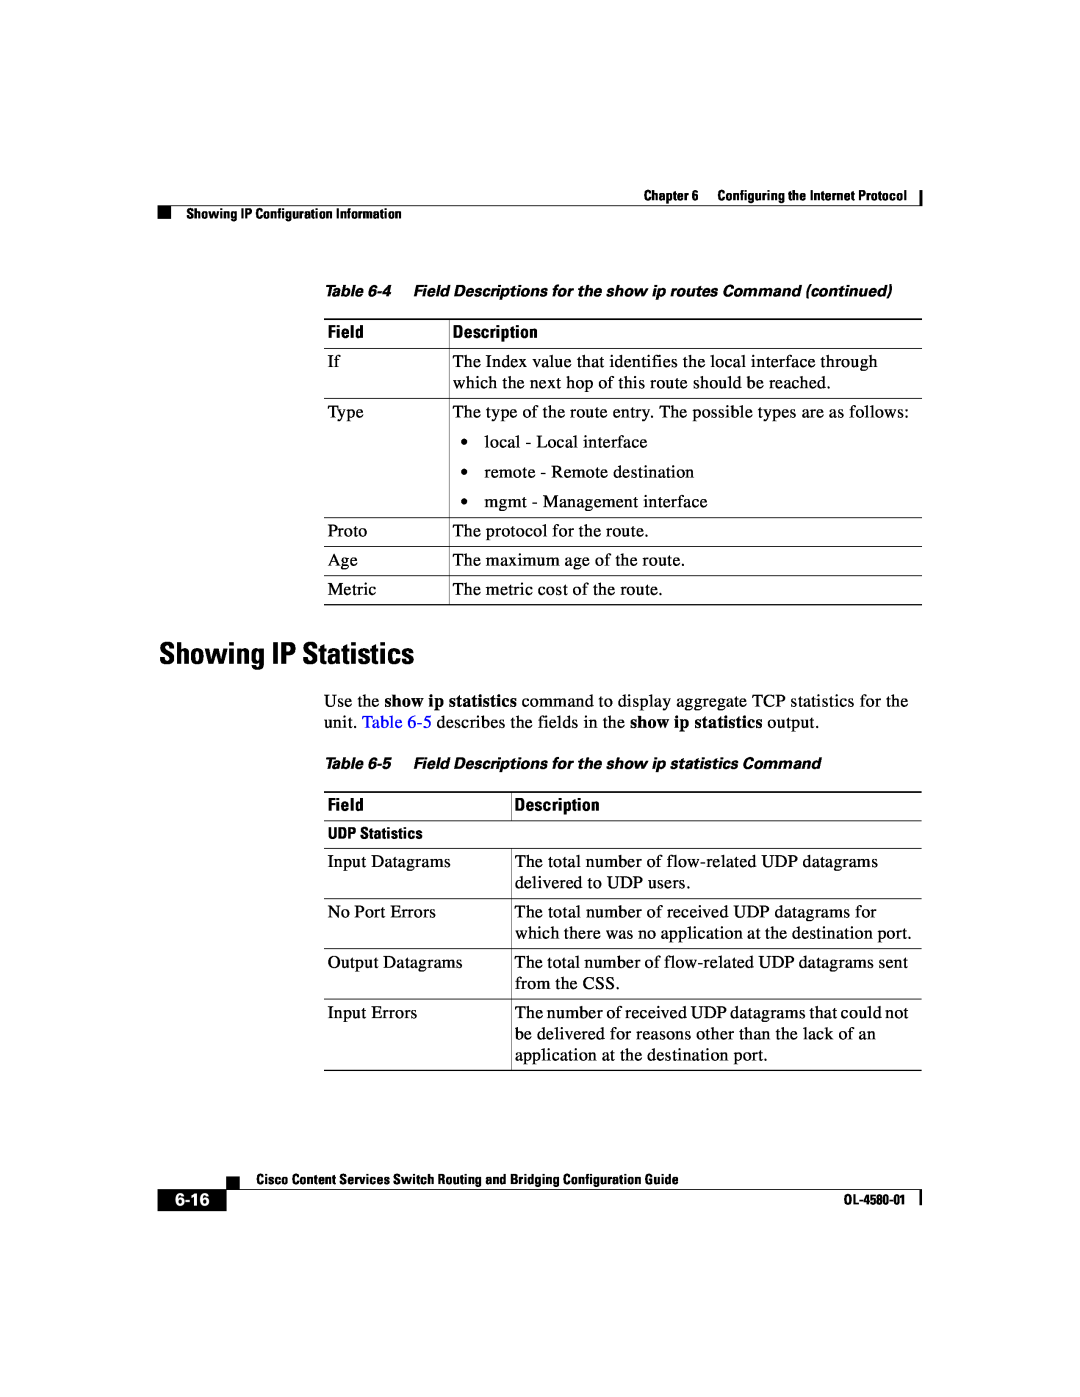 Cisco Systems OL-4580-01 manual Showing IP Statistics, Field, Description, 6-16 